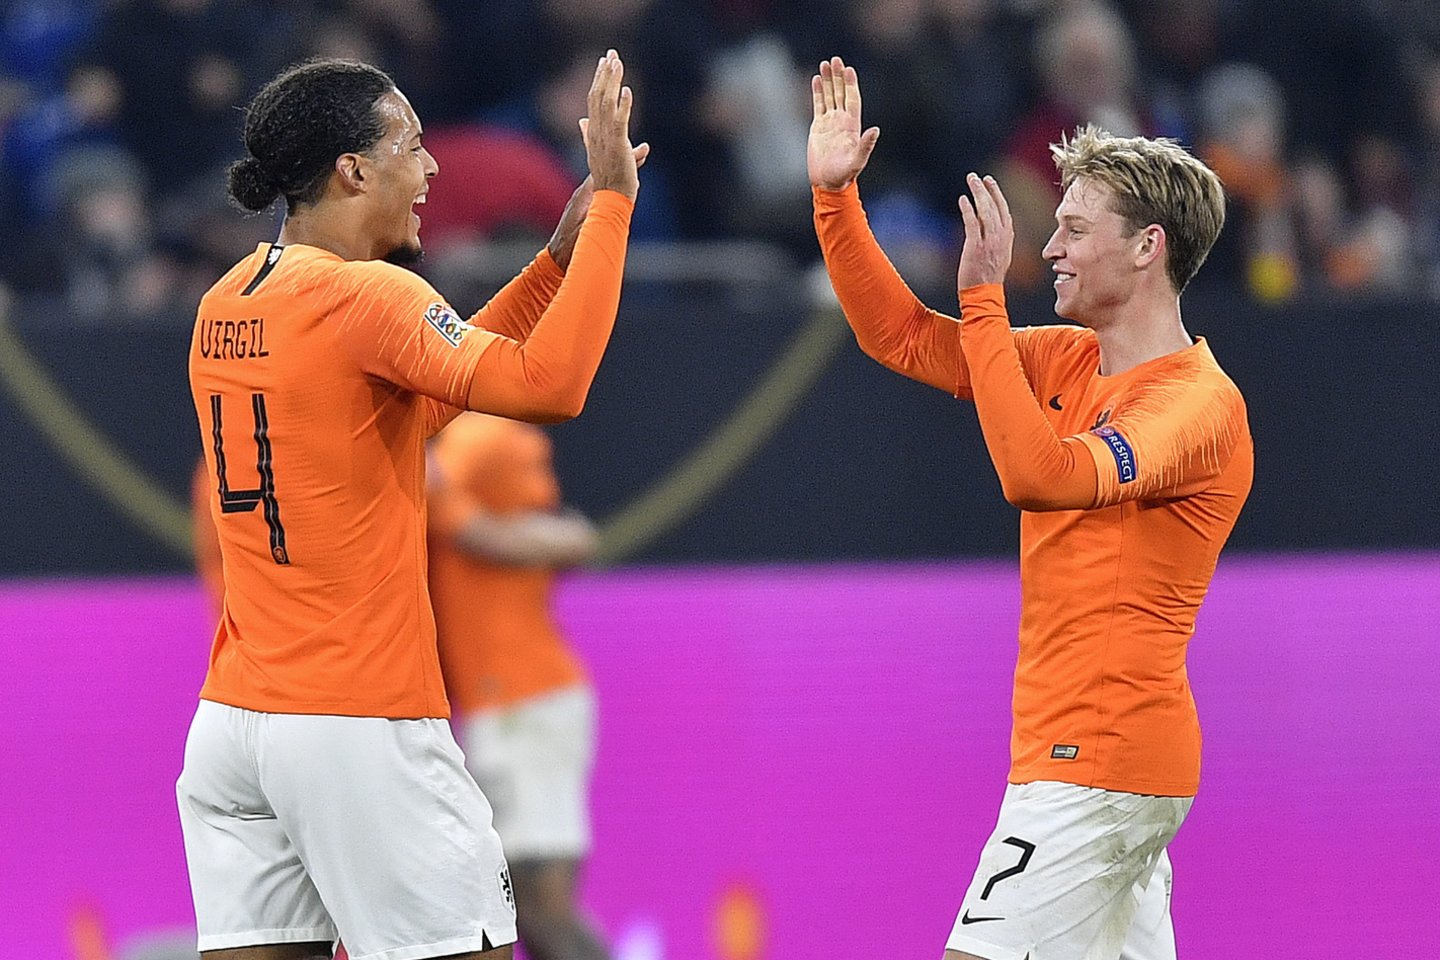  Futbolo visuomenę sužavėjo Nyderlandų gynėjo poelgis.<br> AP nuotr.